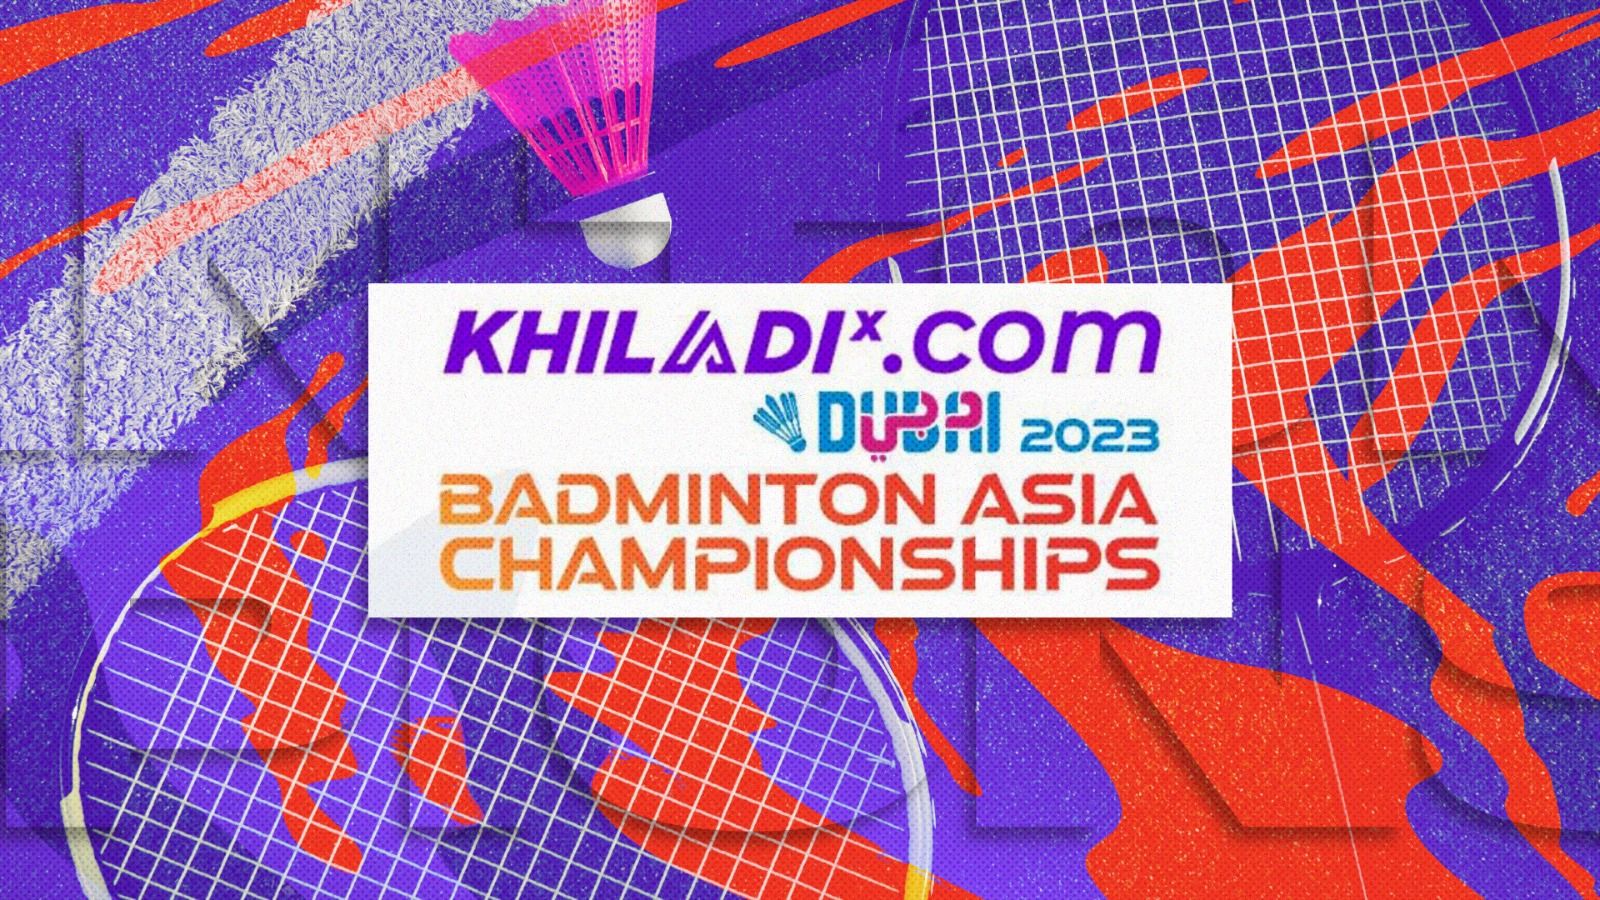 Kejuaraan Bulu Tangkis Asia 2023 alias Badminton Asia Championships 2023.